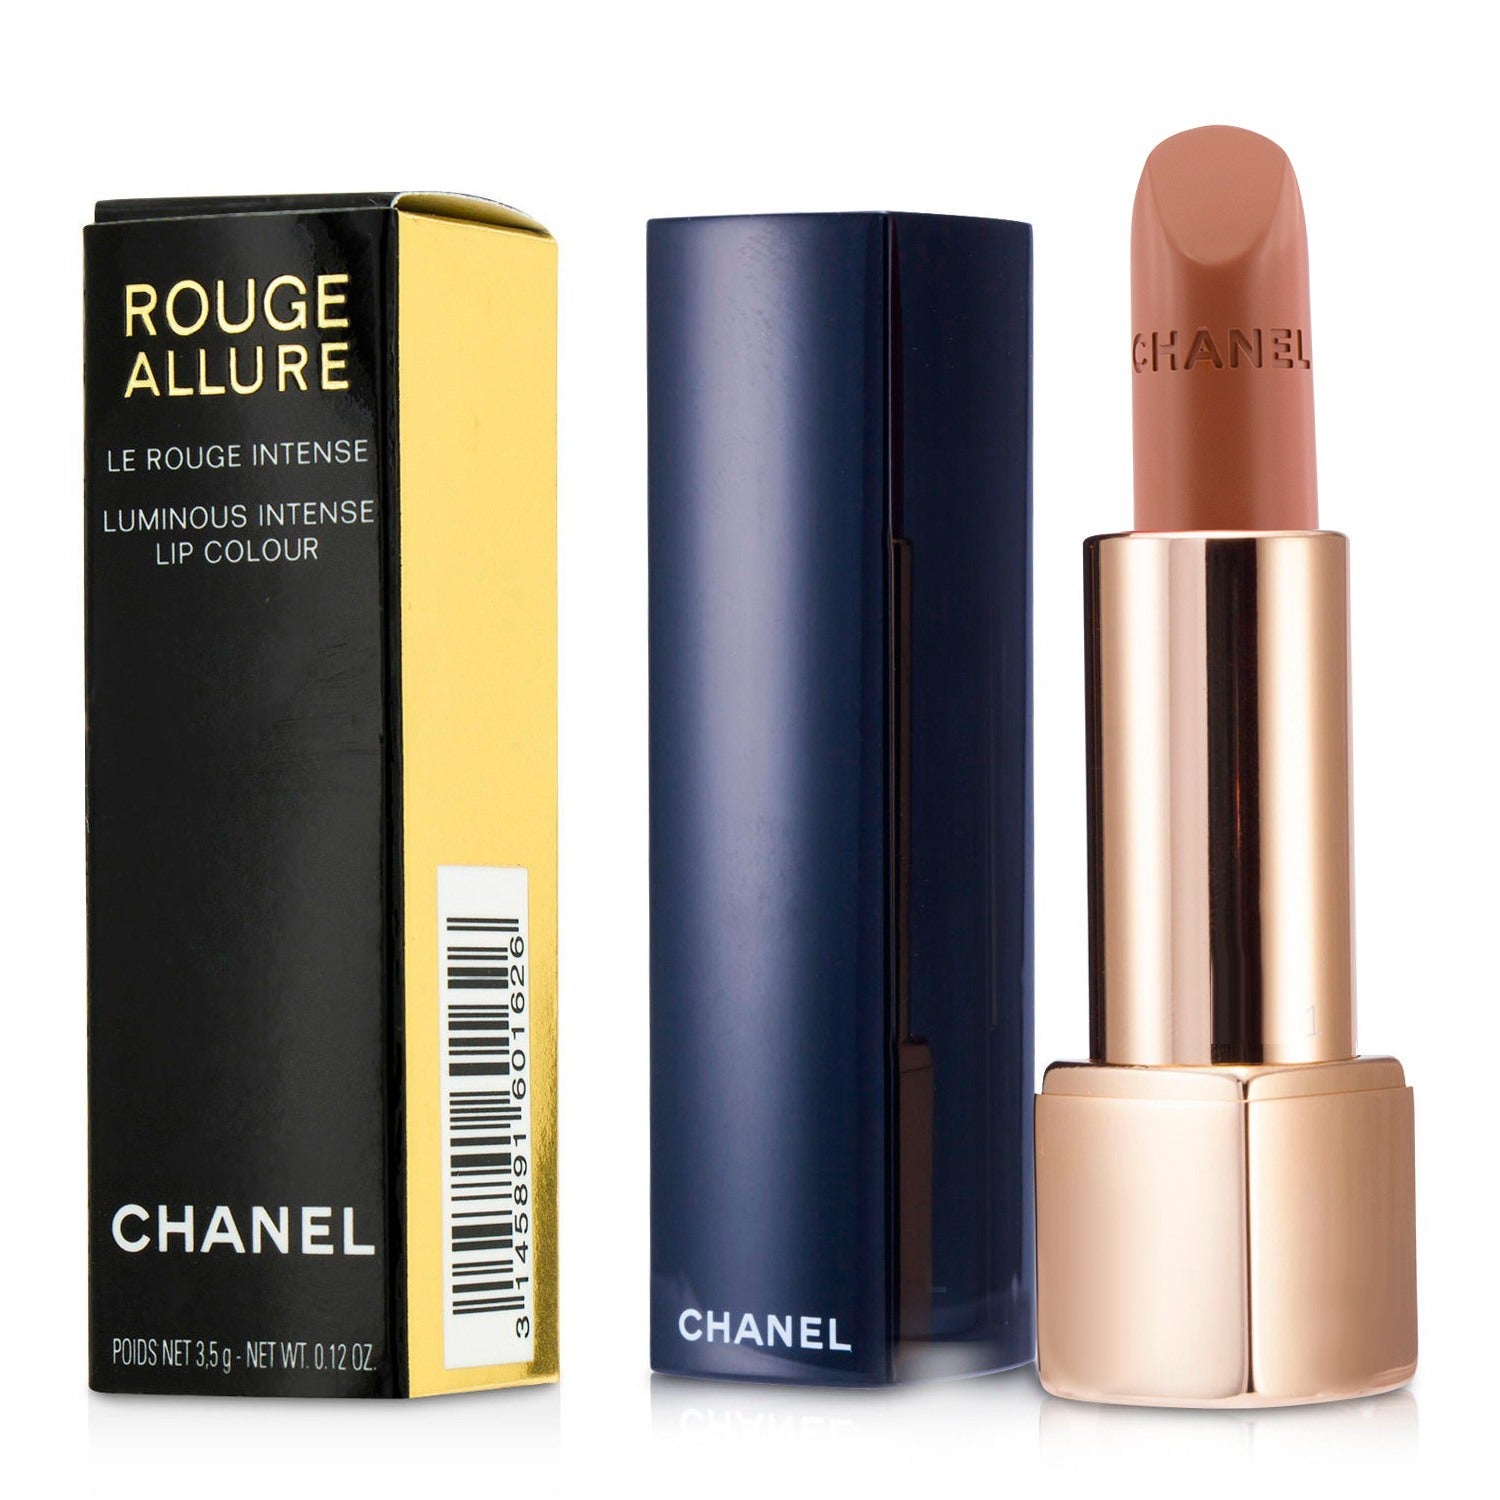 CHANEL, Makeup, Chanel 3 Beige Petale Long Lasting Concealer